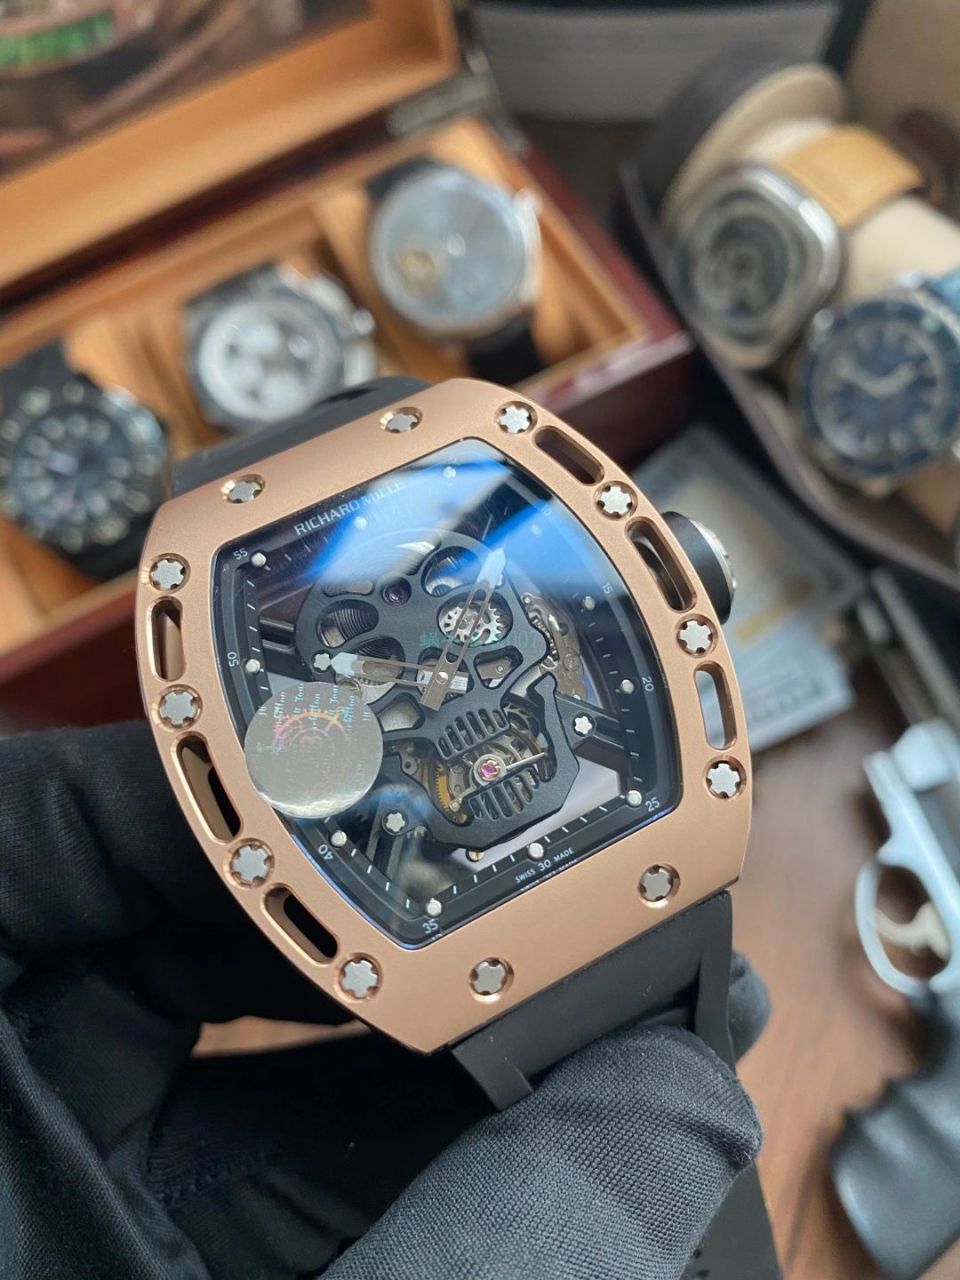 JB厂理查德米勒RM52-01真陀飞轮骷髅头1比1顶级复刻手表RICHARD MILLE腕表 / RM5201JBJ